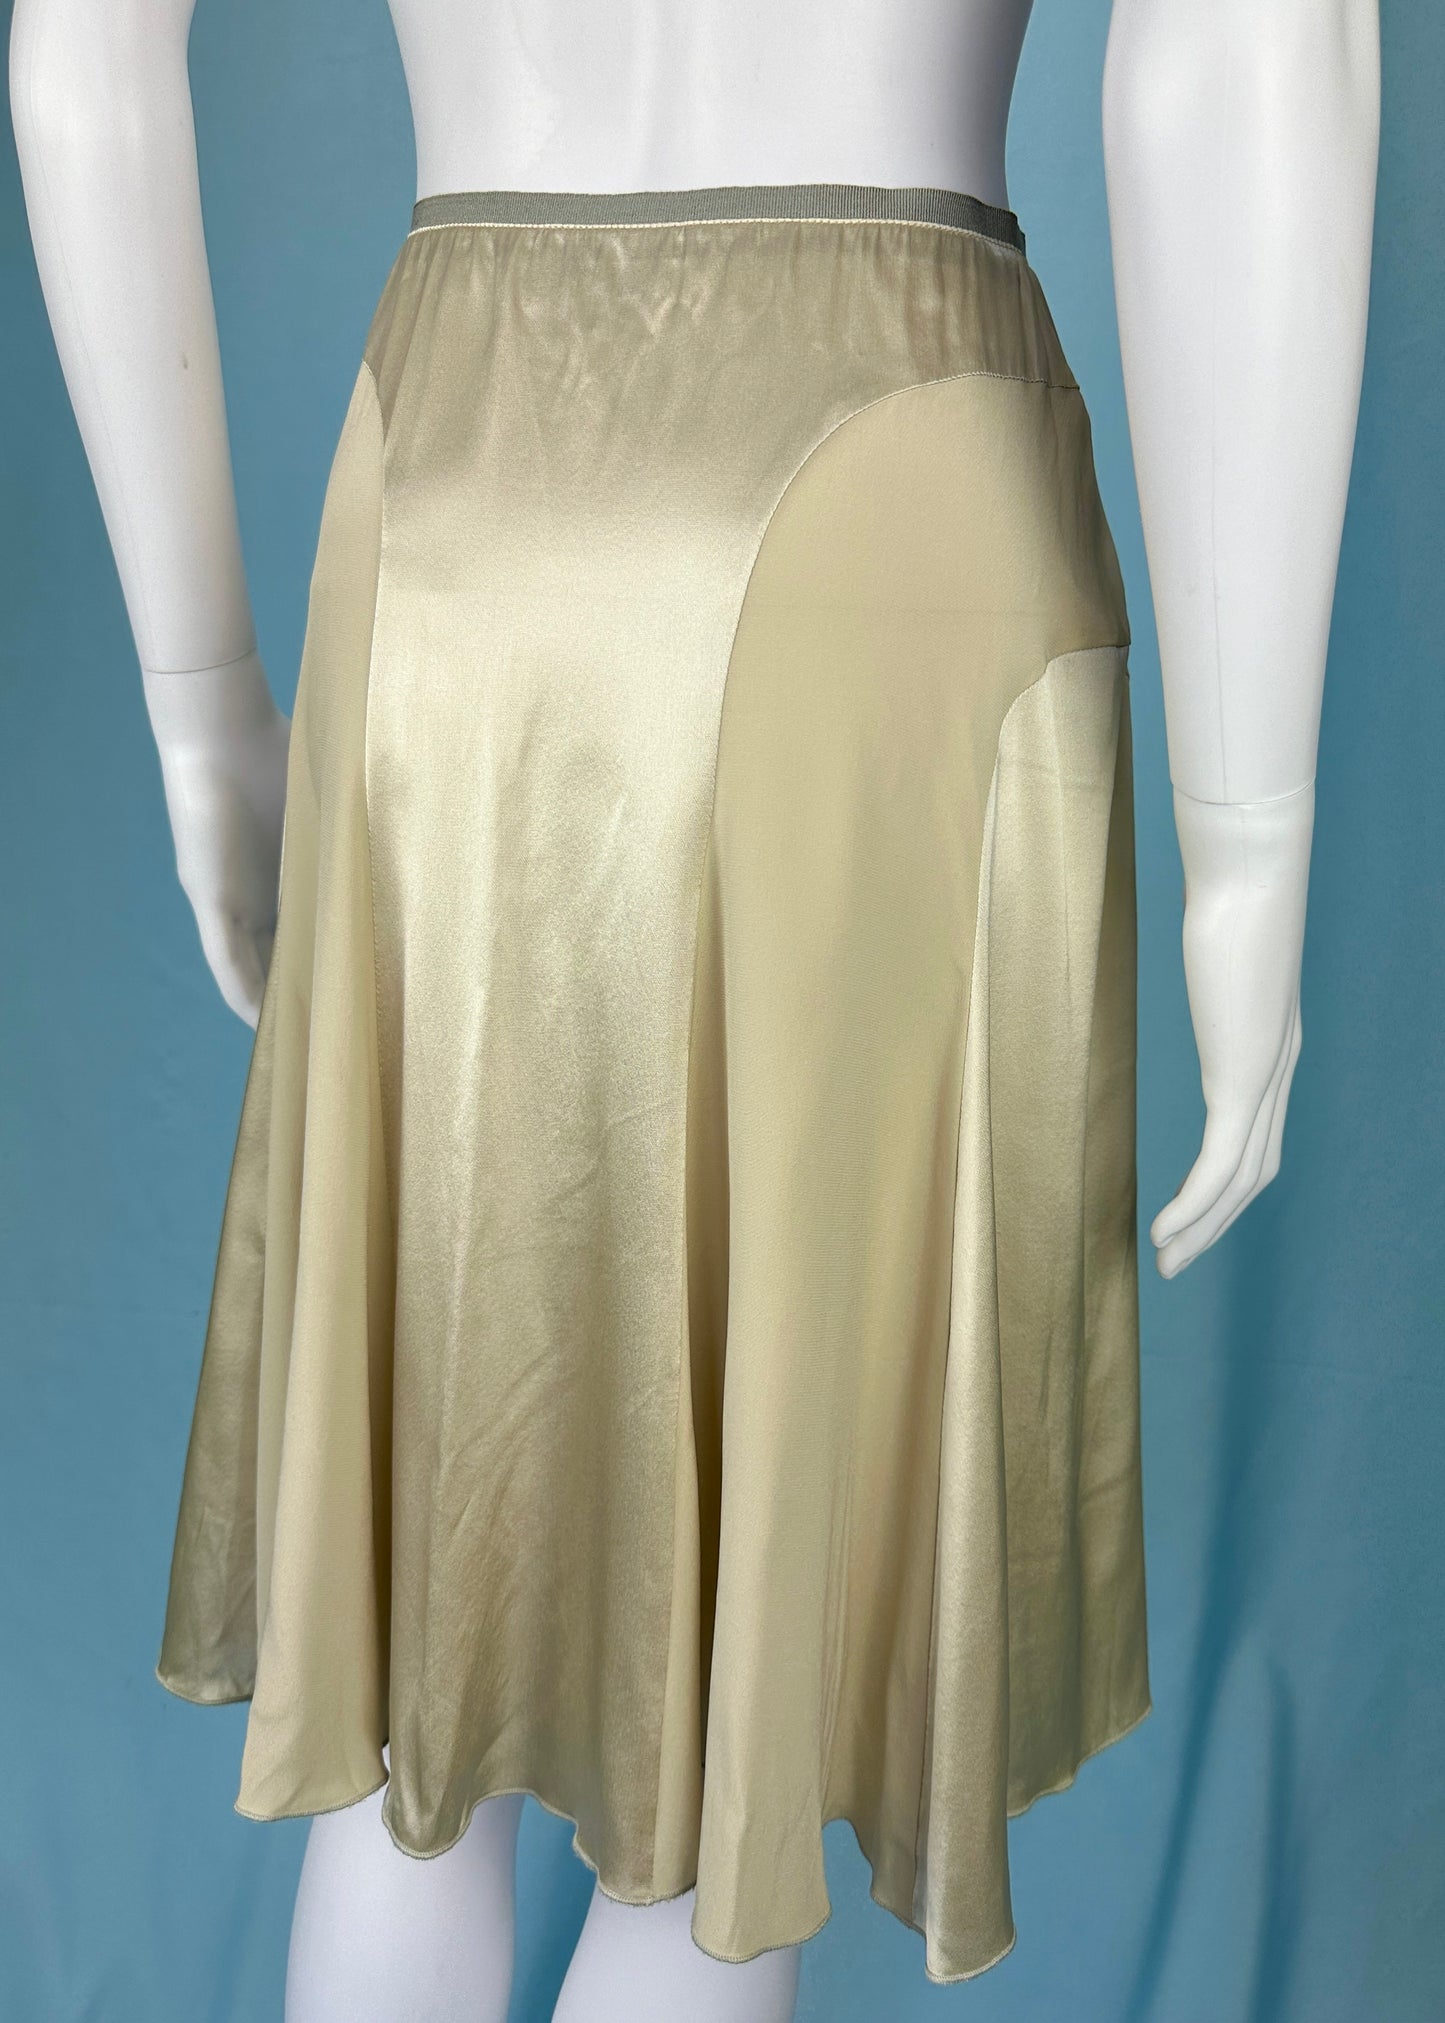 Blumarine Taupe Silk Two Tone Skirt